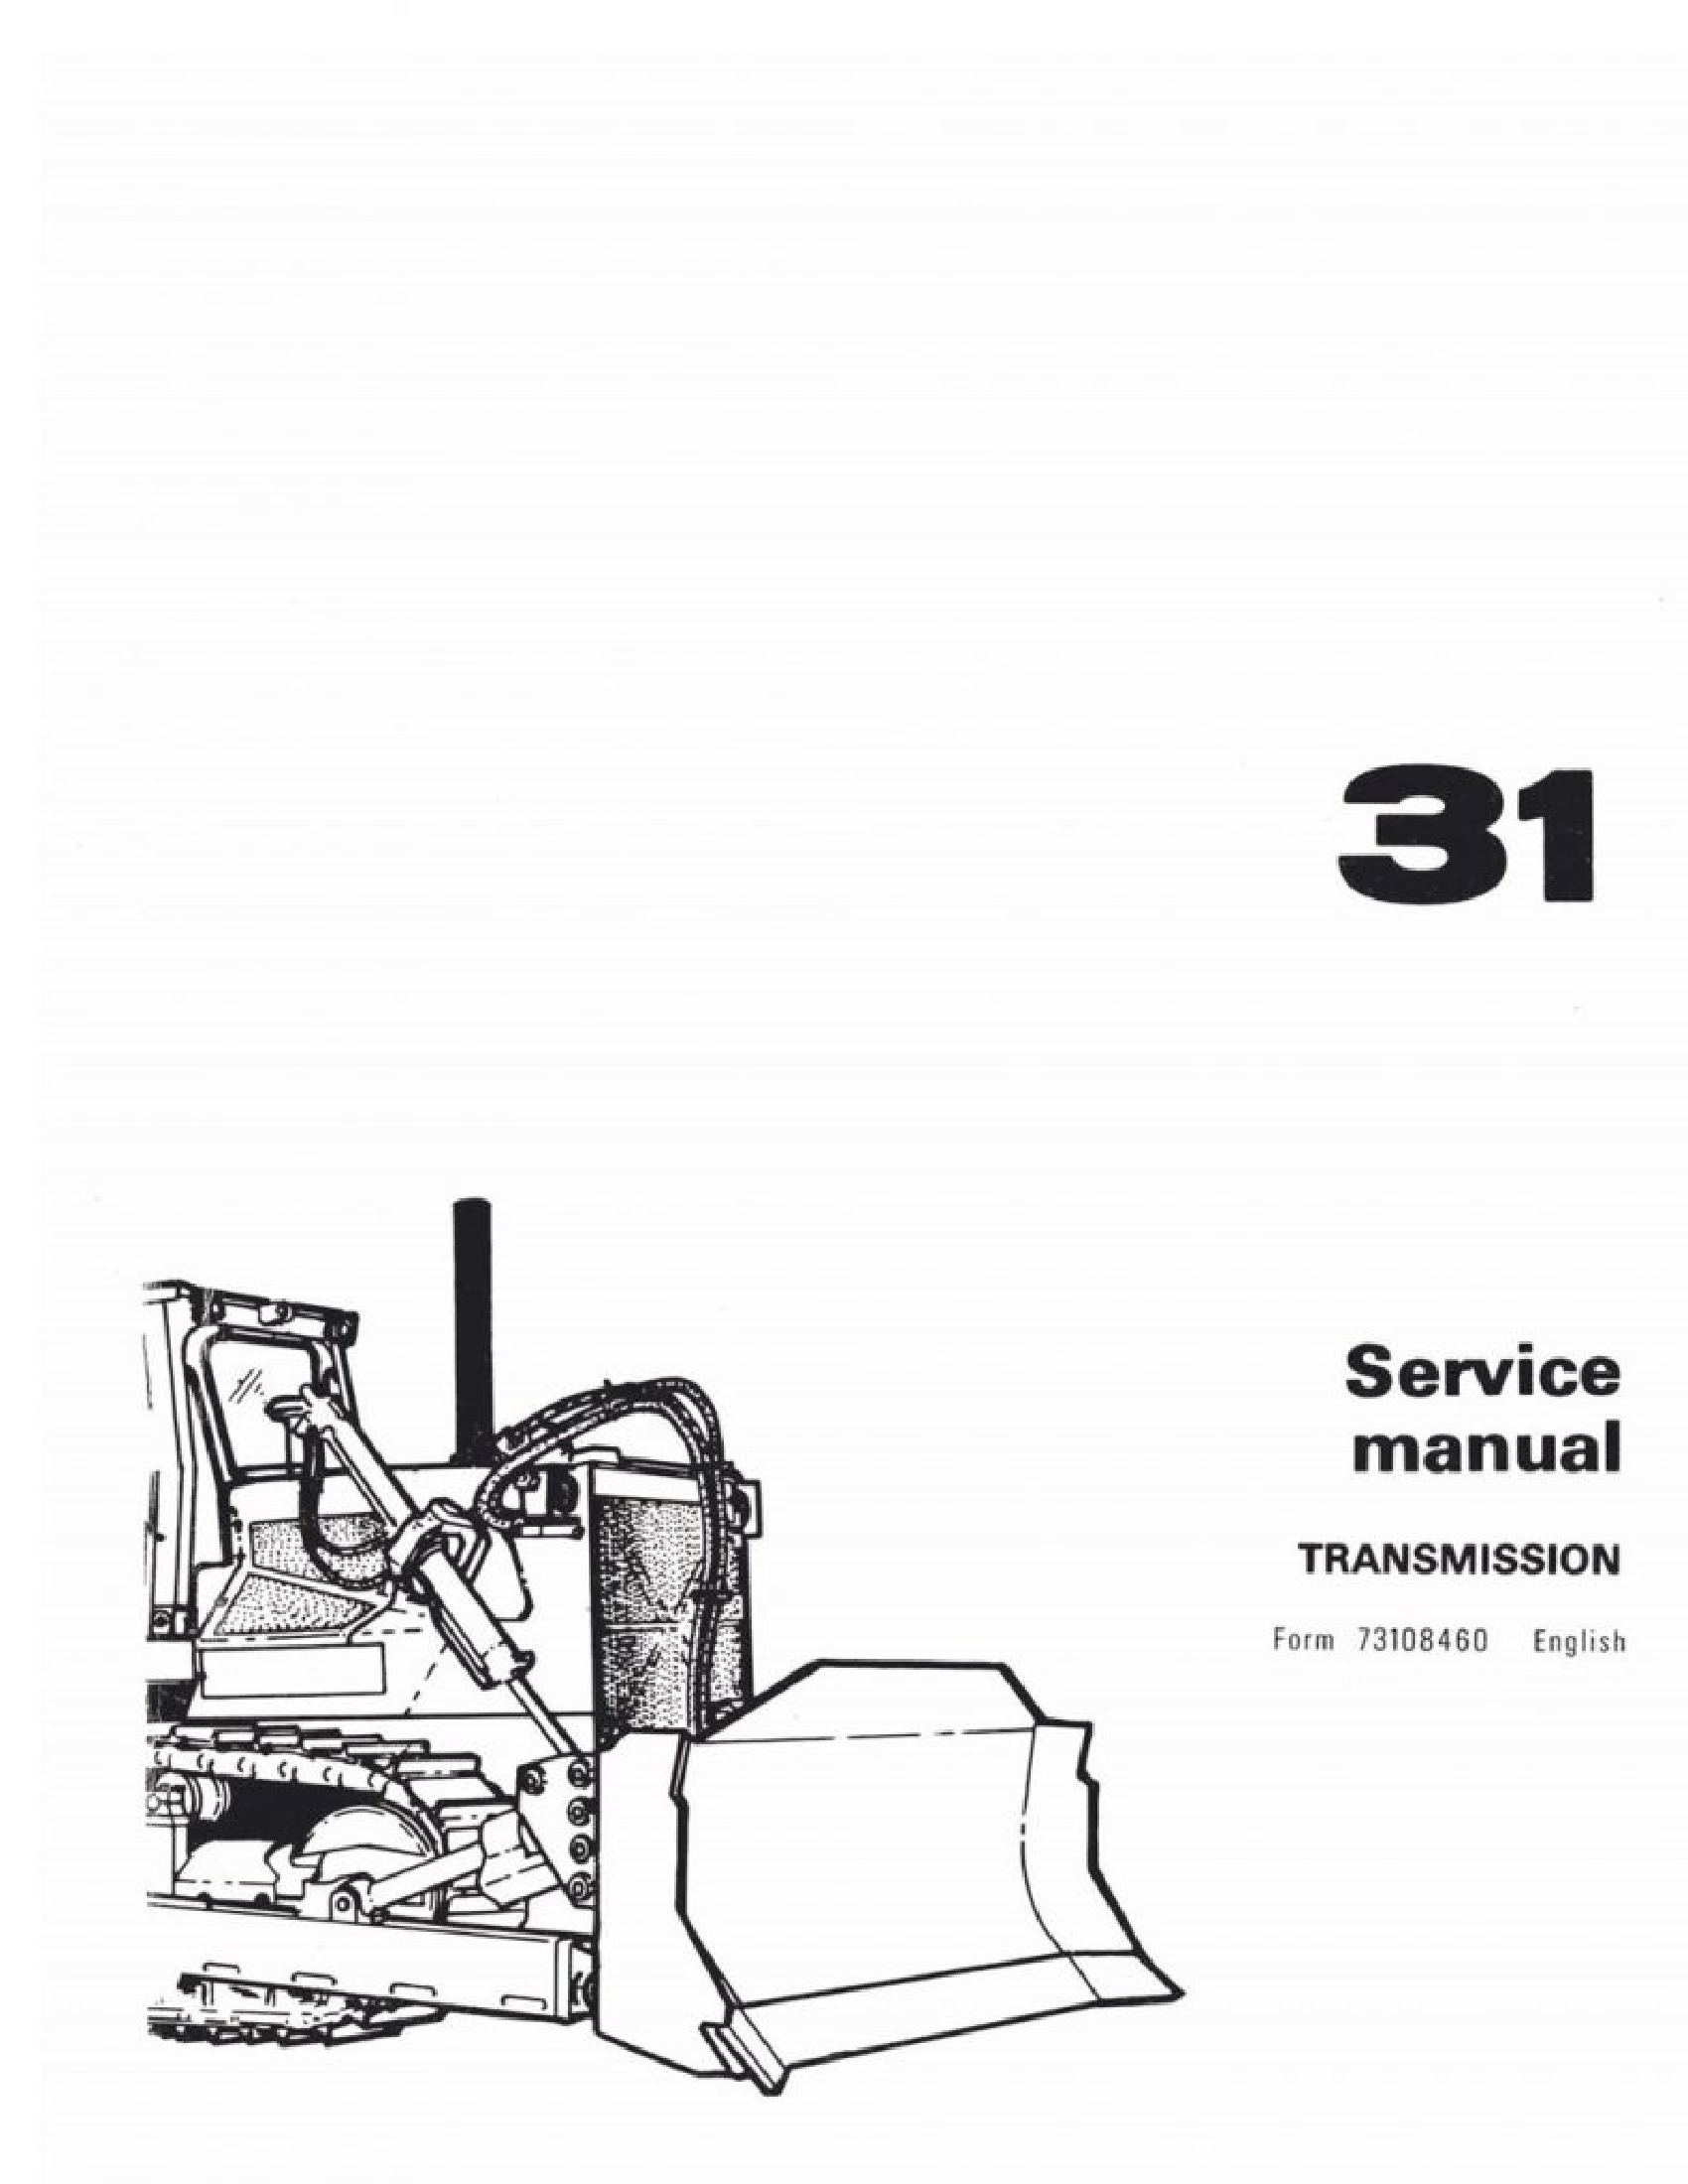 Fiat-Allis 31 Crawler Tractor manual